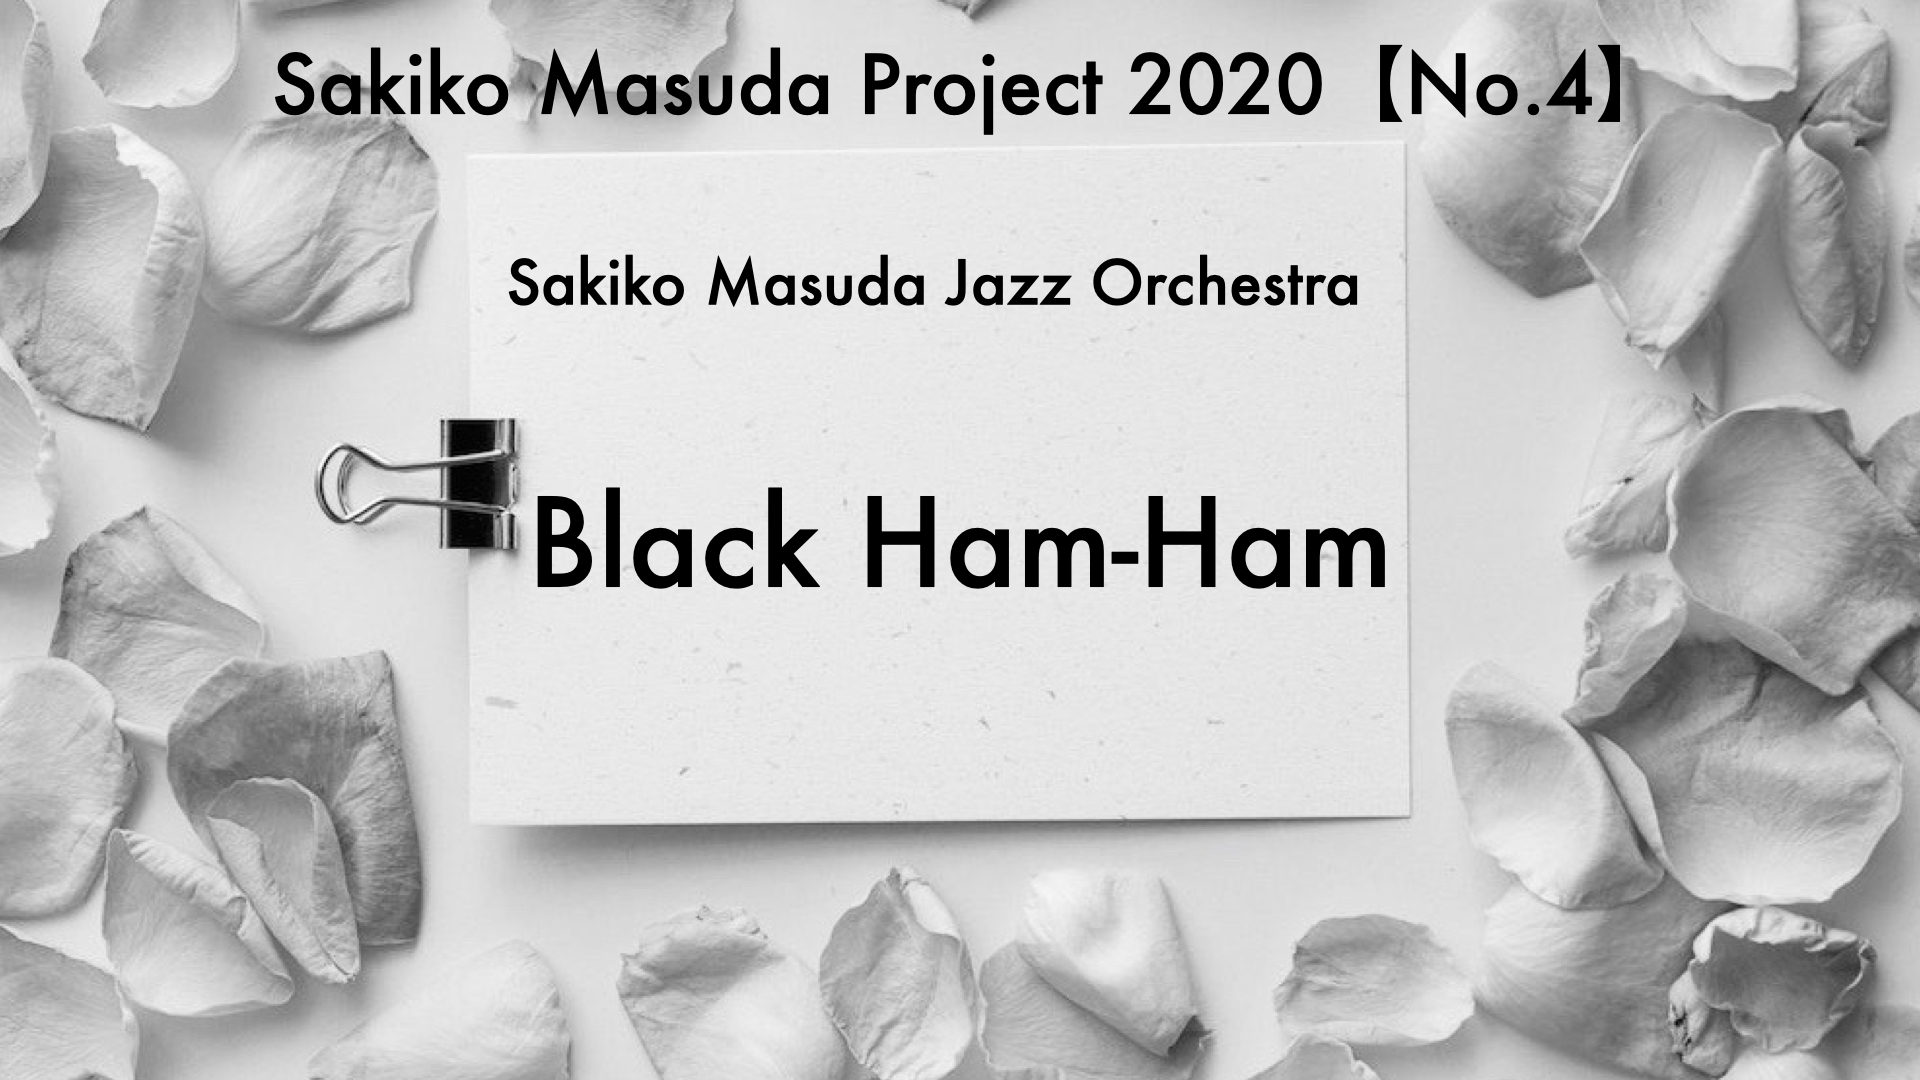 Black Ham-Ham 【No.4 Sakiko Masuda Project 2020】